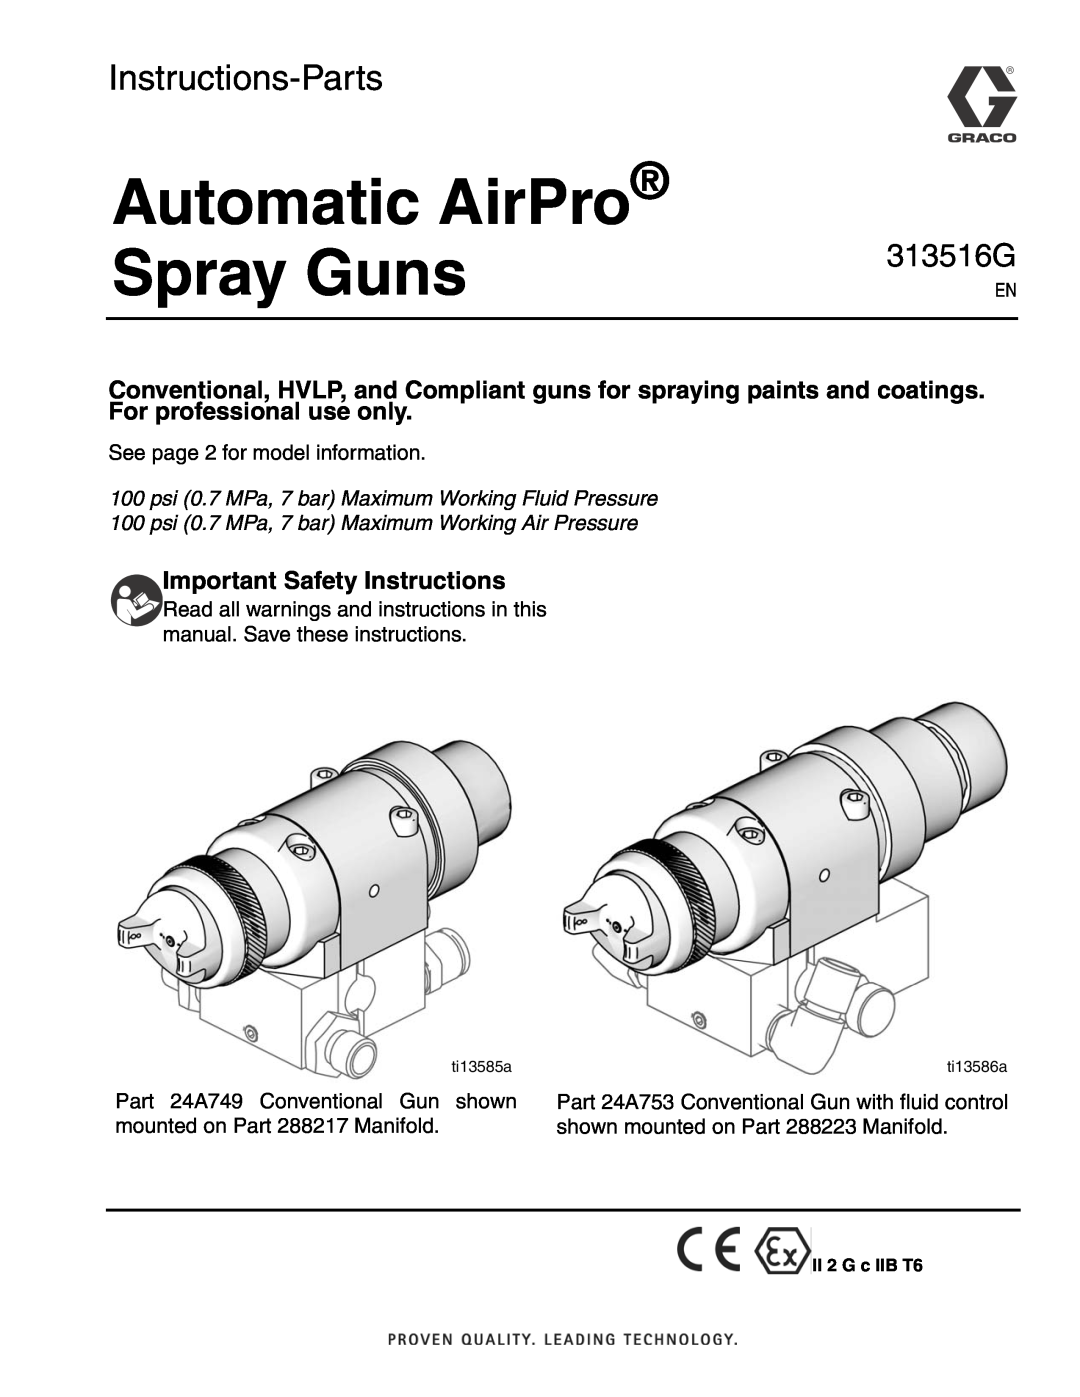 Graco ti13586a, ti13585a important safety instructions Important Safety Instructions, Automatic AirPro Spray Guns, 313516G 